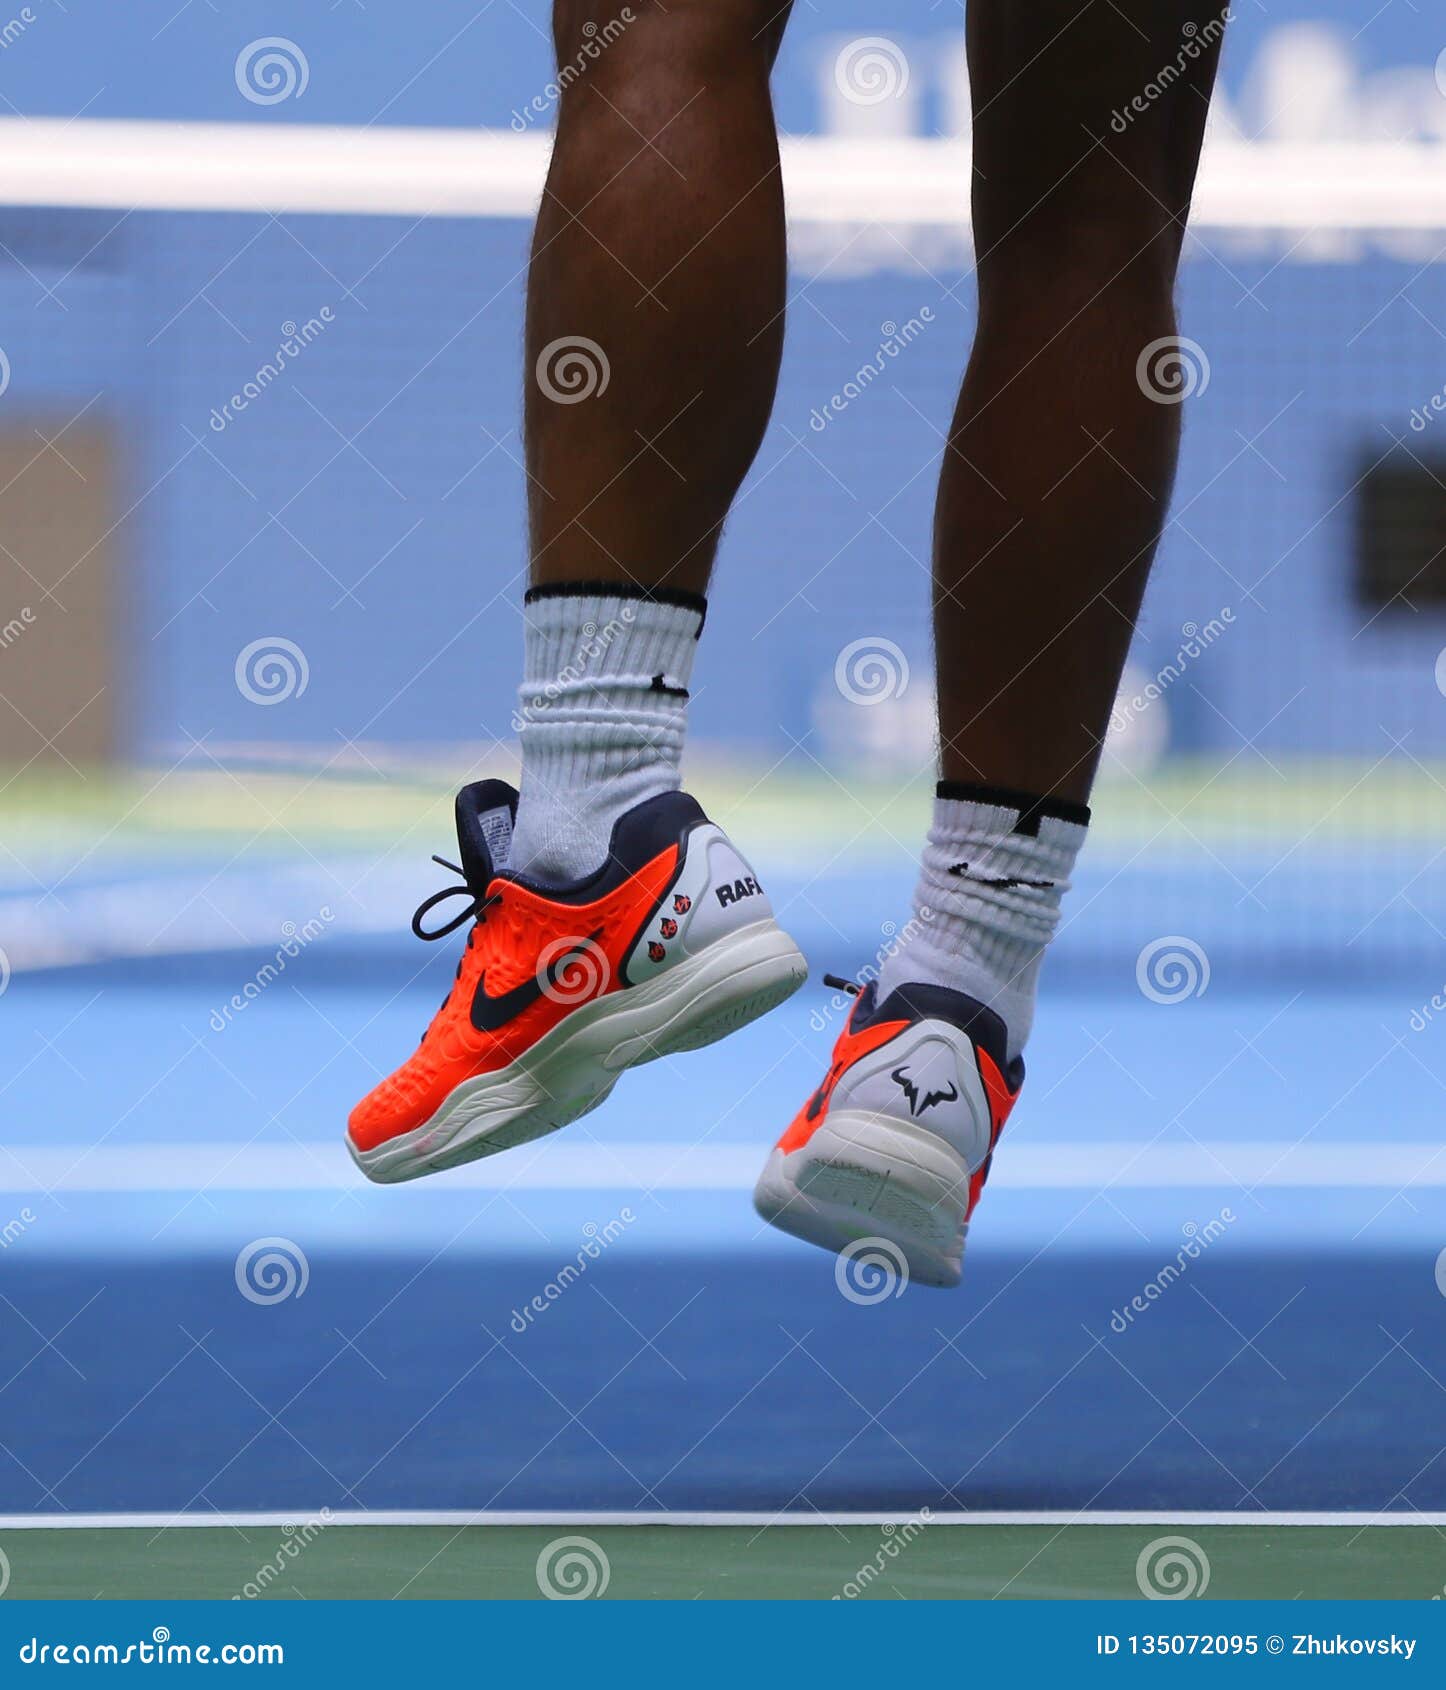 Grand Slam Champion Rafael Nadal of Spain Wears Custom Nike Tennis Shoes US Open 2018 Editorial Image - Image of open, players: 135072095